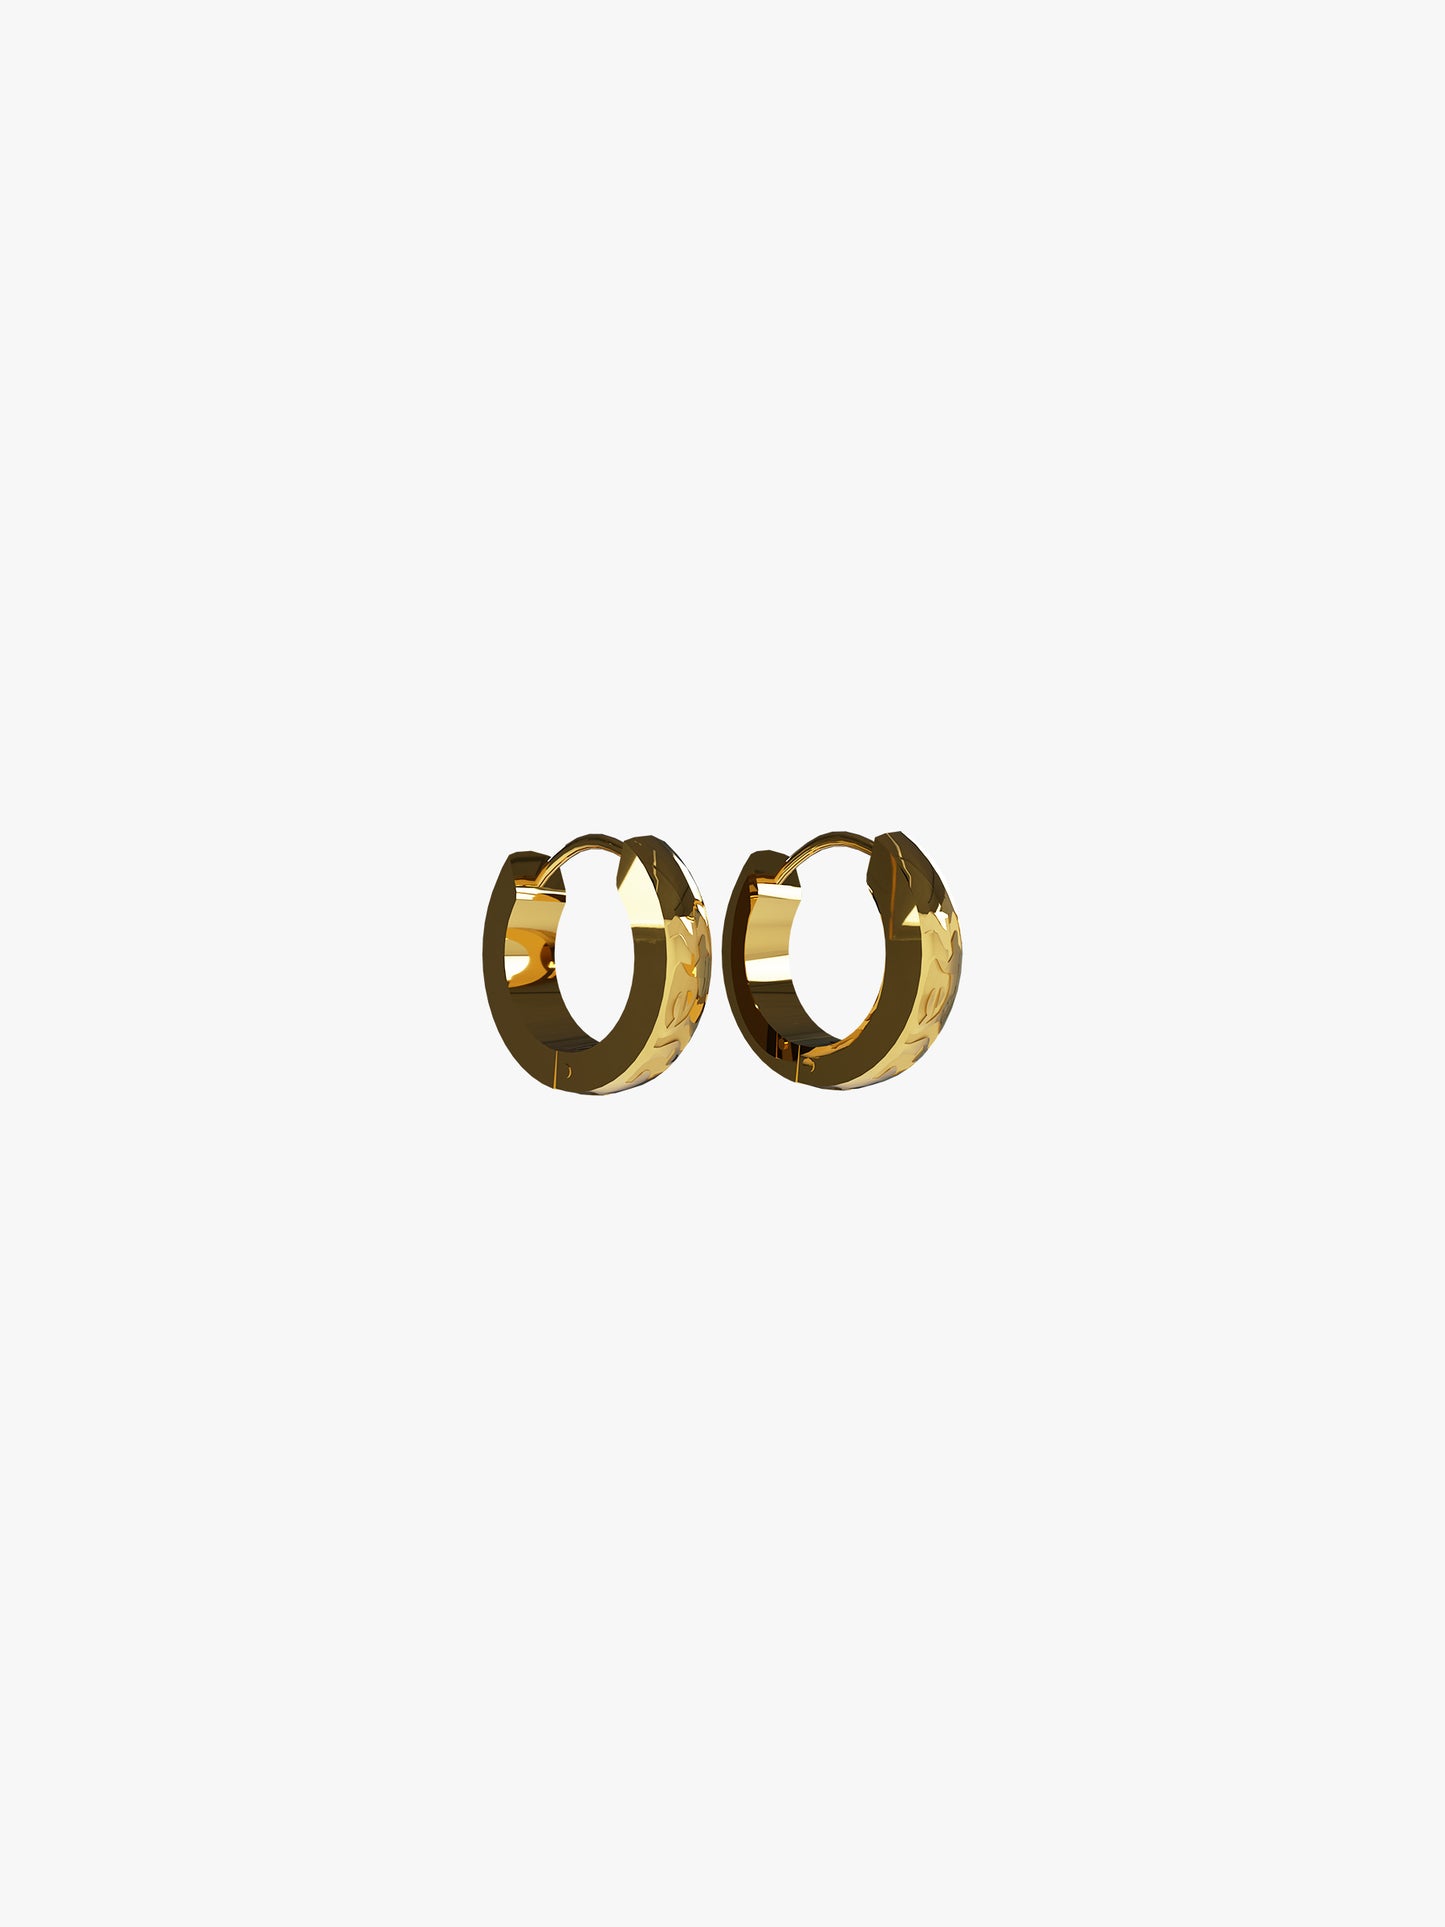 Tiny gold earrings (pair)